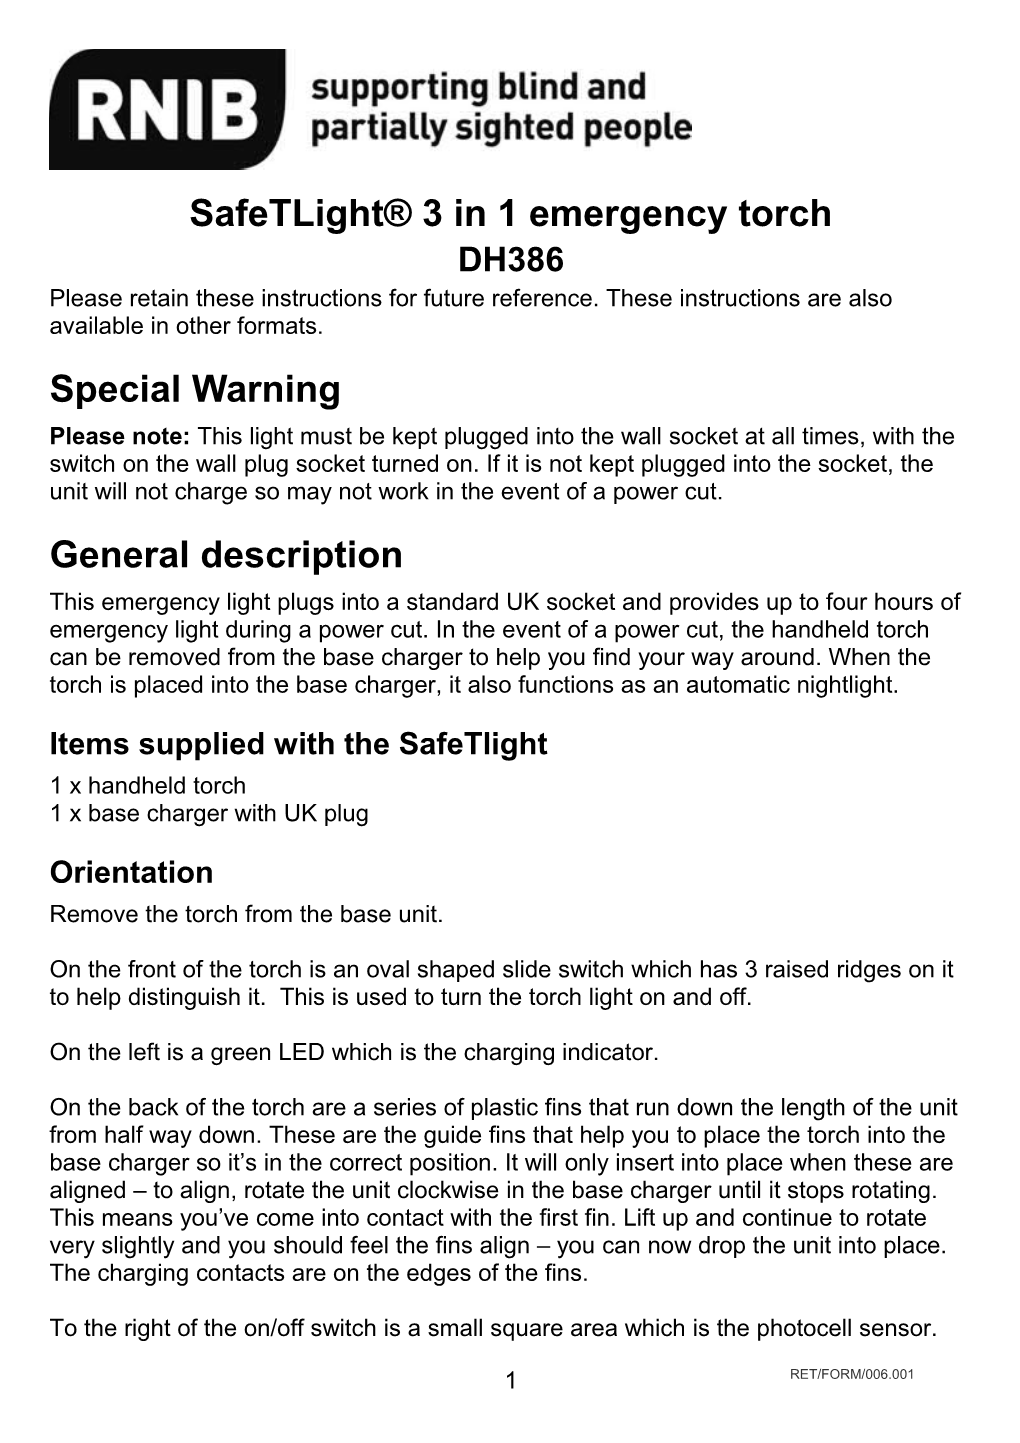 Safetlight 3 in 1 Emergency Torch